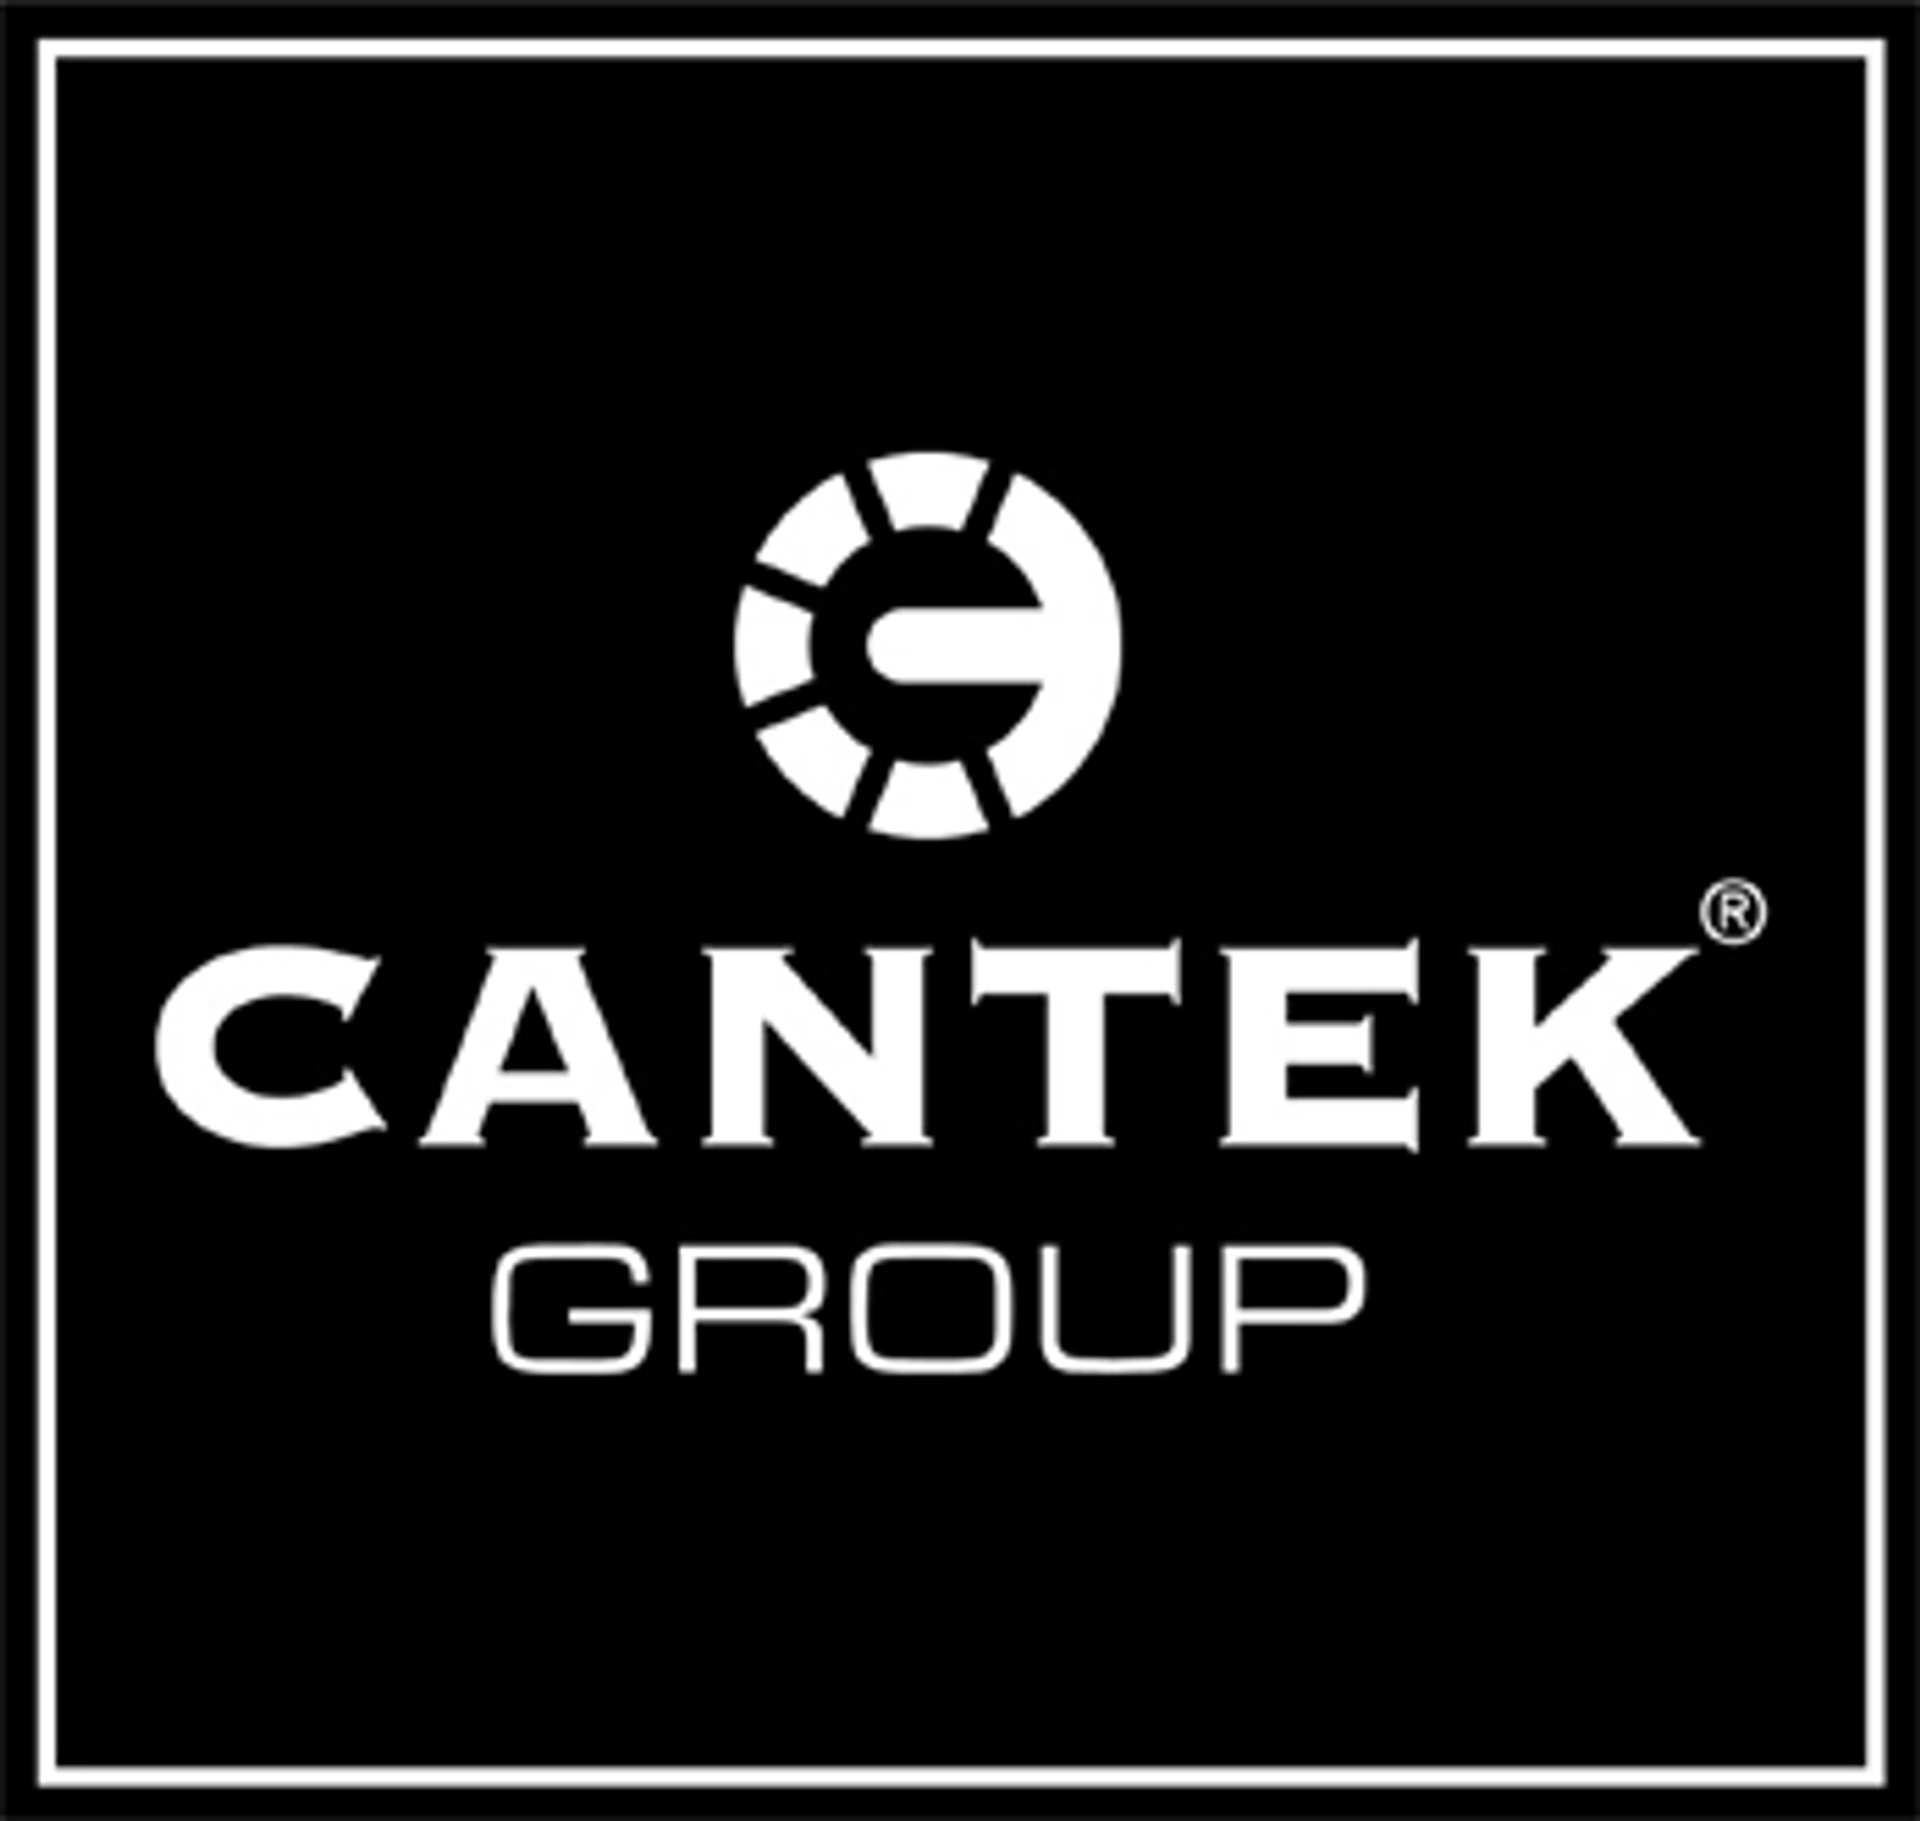 CANTEK Group